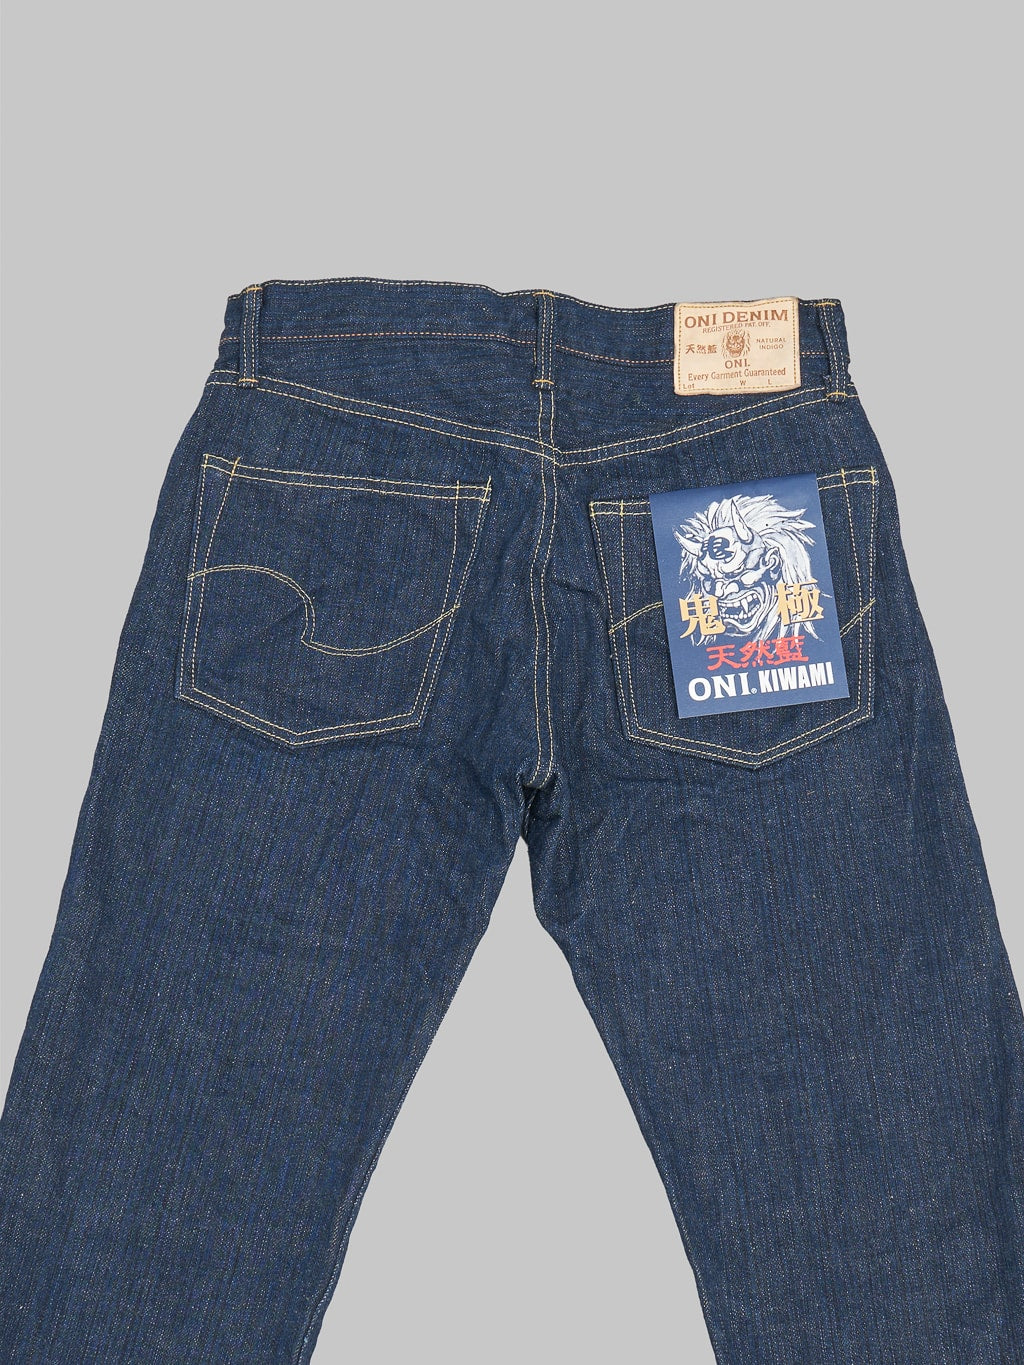 Oni denim kiwami indigo regular selvedge jeans back view